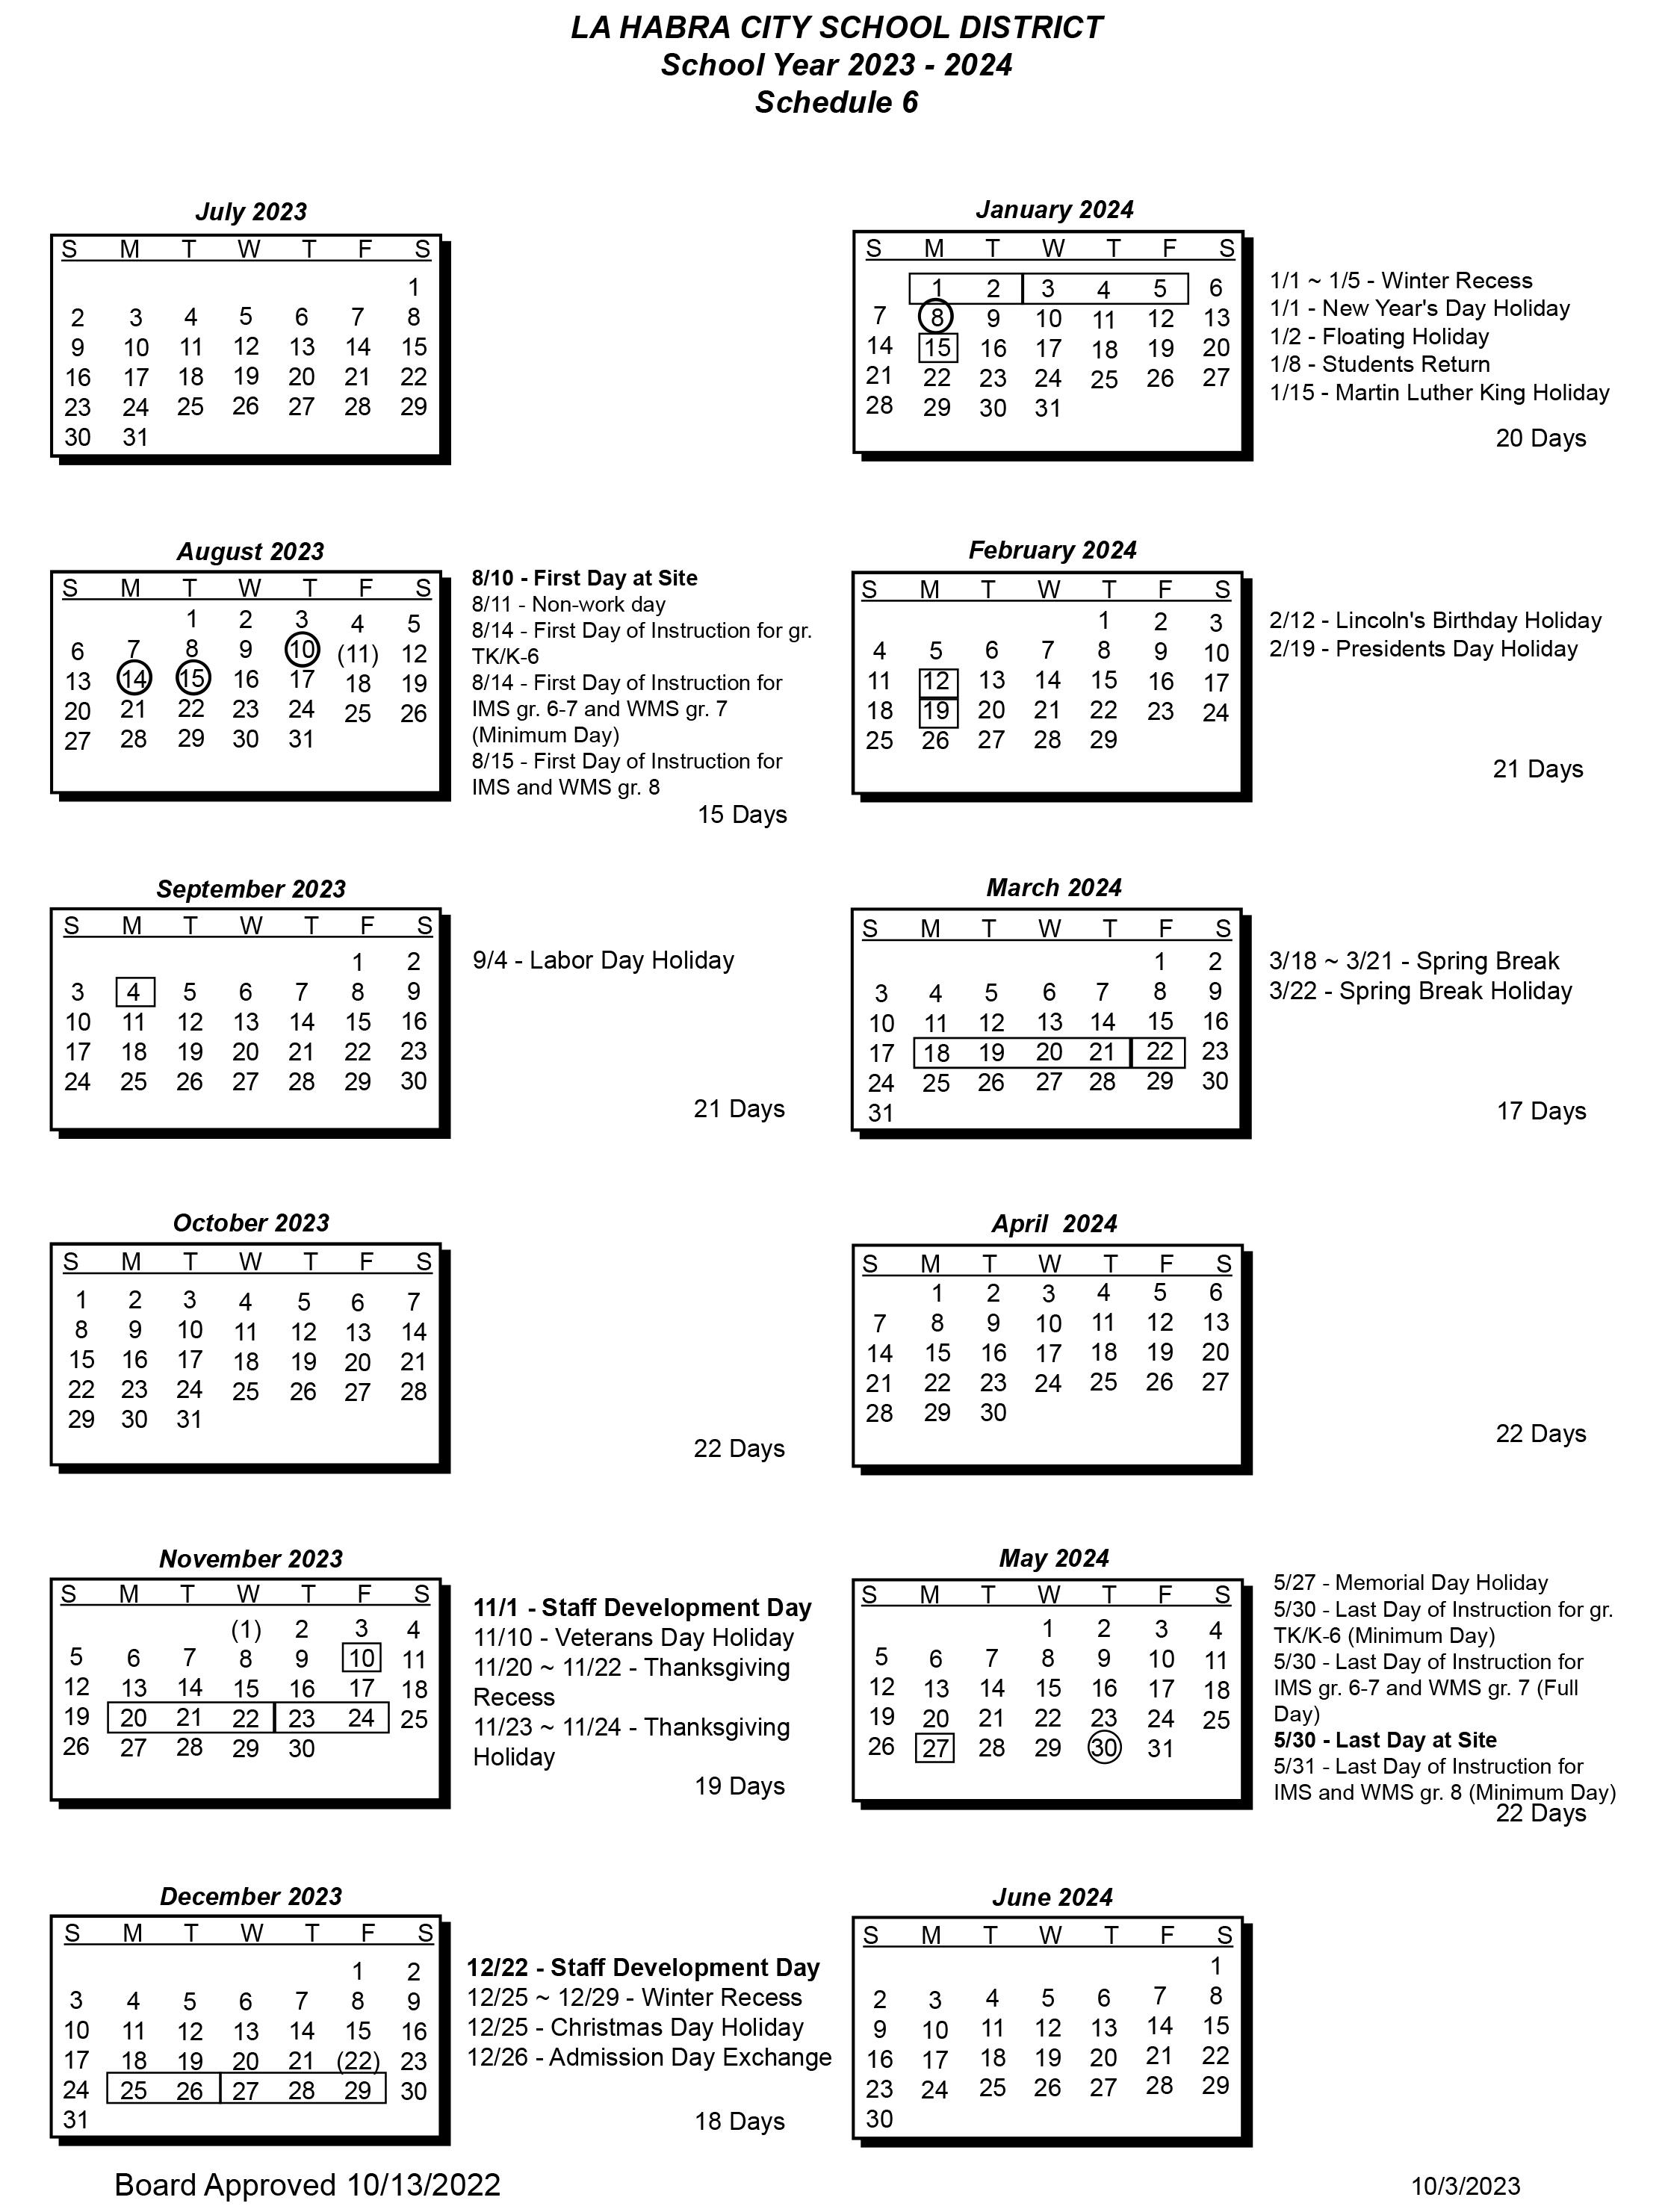 School Year Calendar Schedule 6